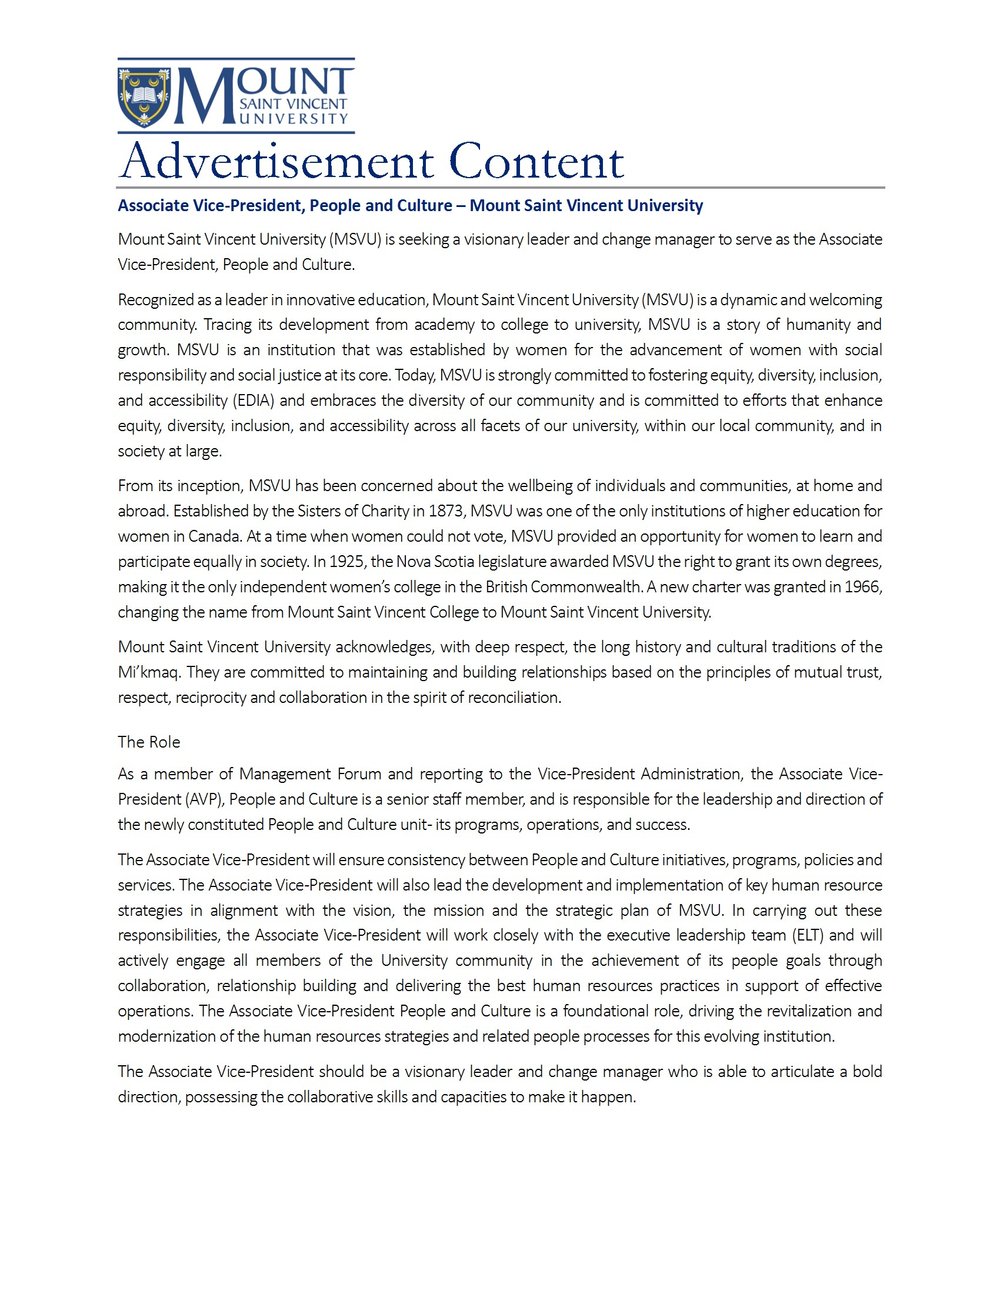 Approved-Advertisement-MSVU-AVP-P&C conv 1.jpeg